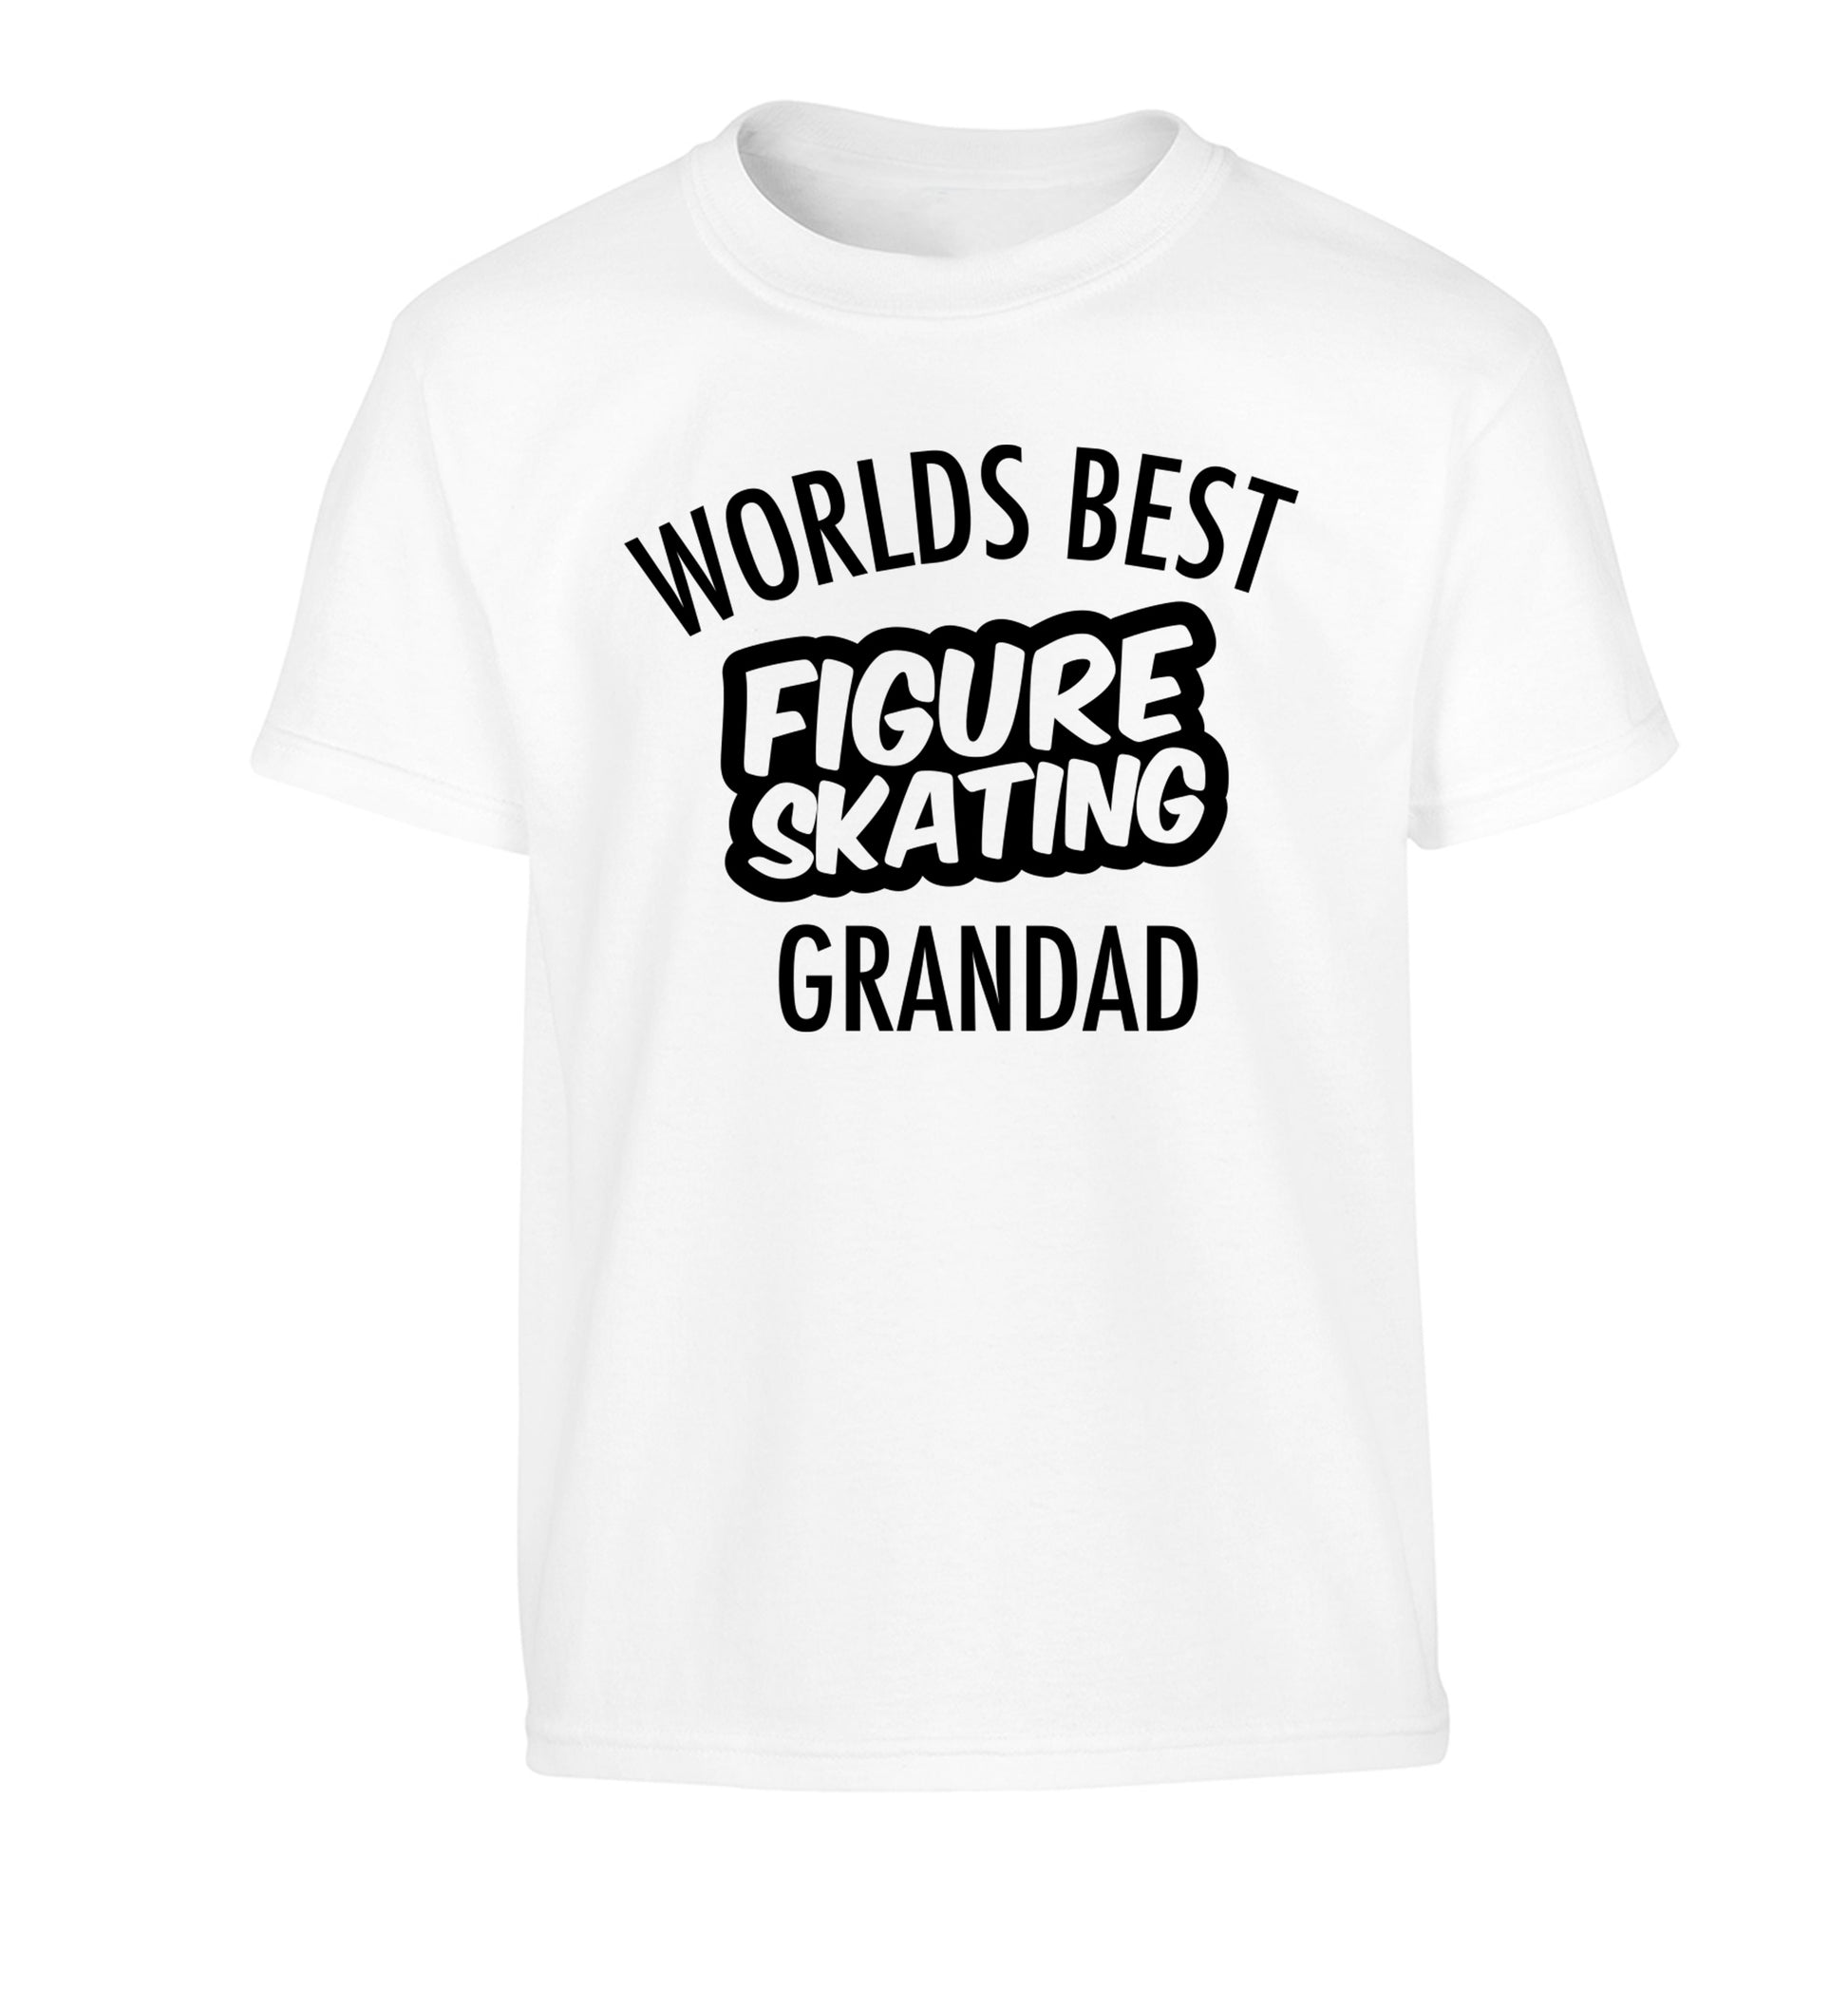 Worlds best figure skating grandad Children's white Tshirt 12-14 Years